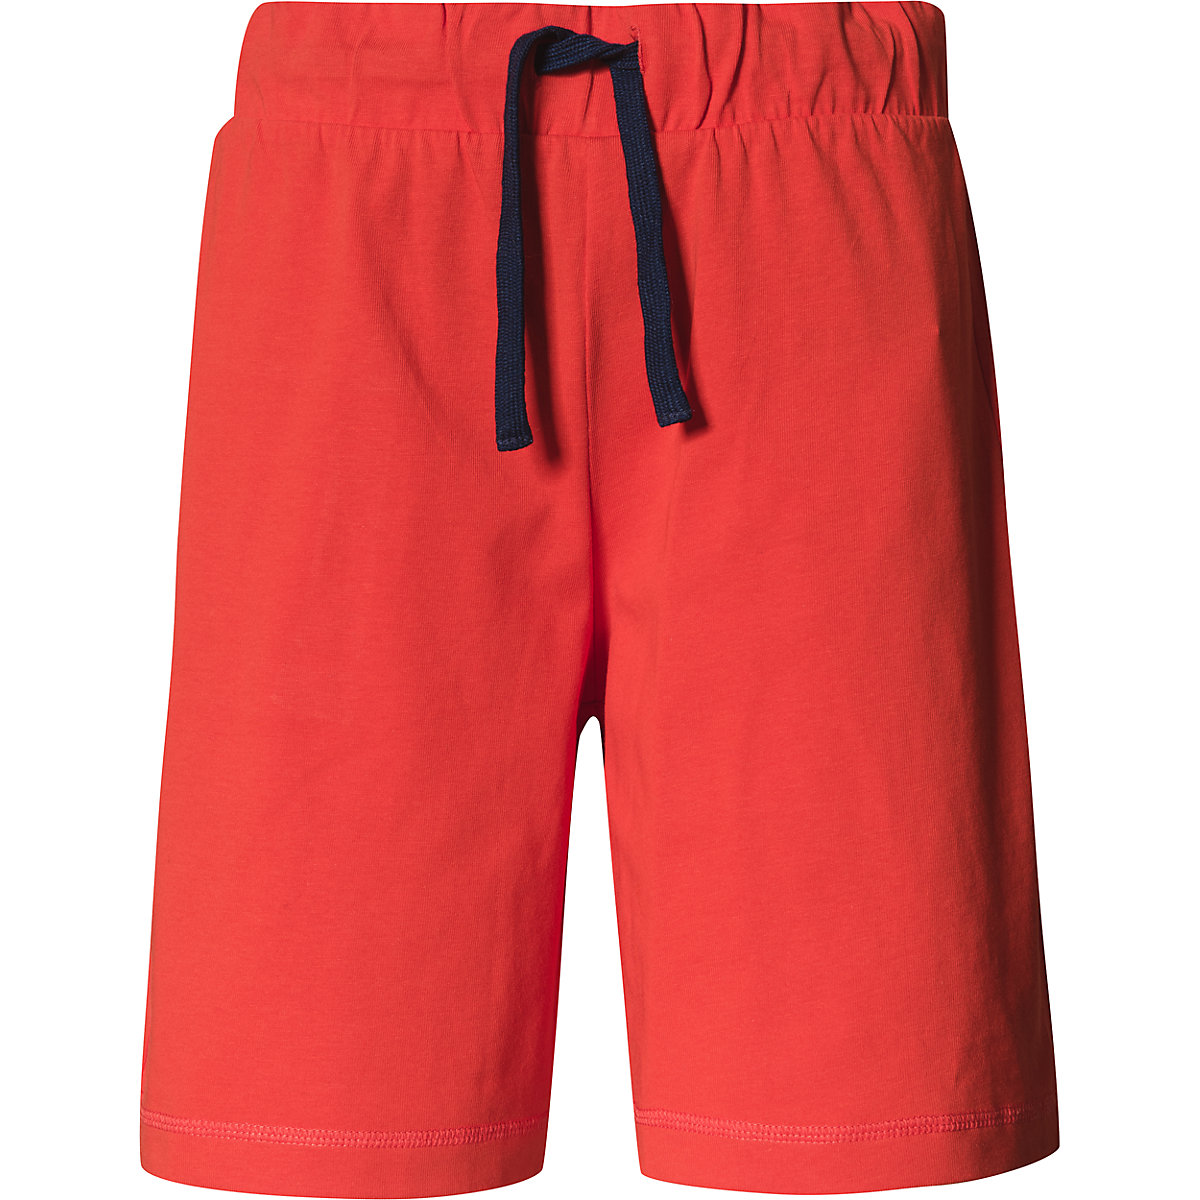 United Colors of Benetton Shorts für Jungen rot